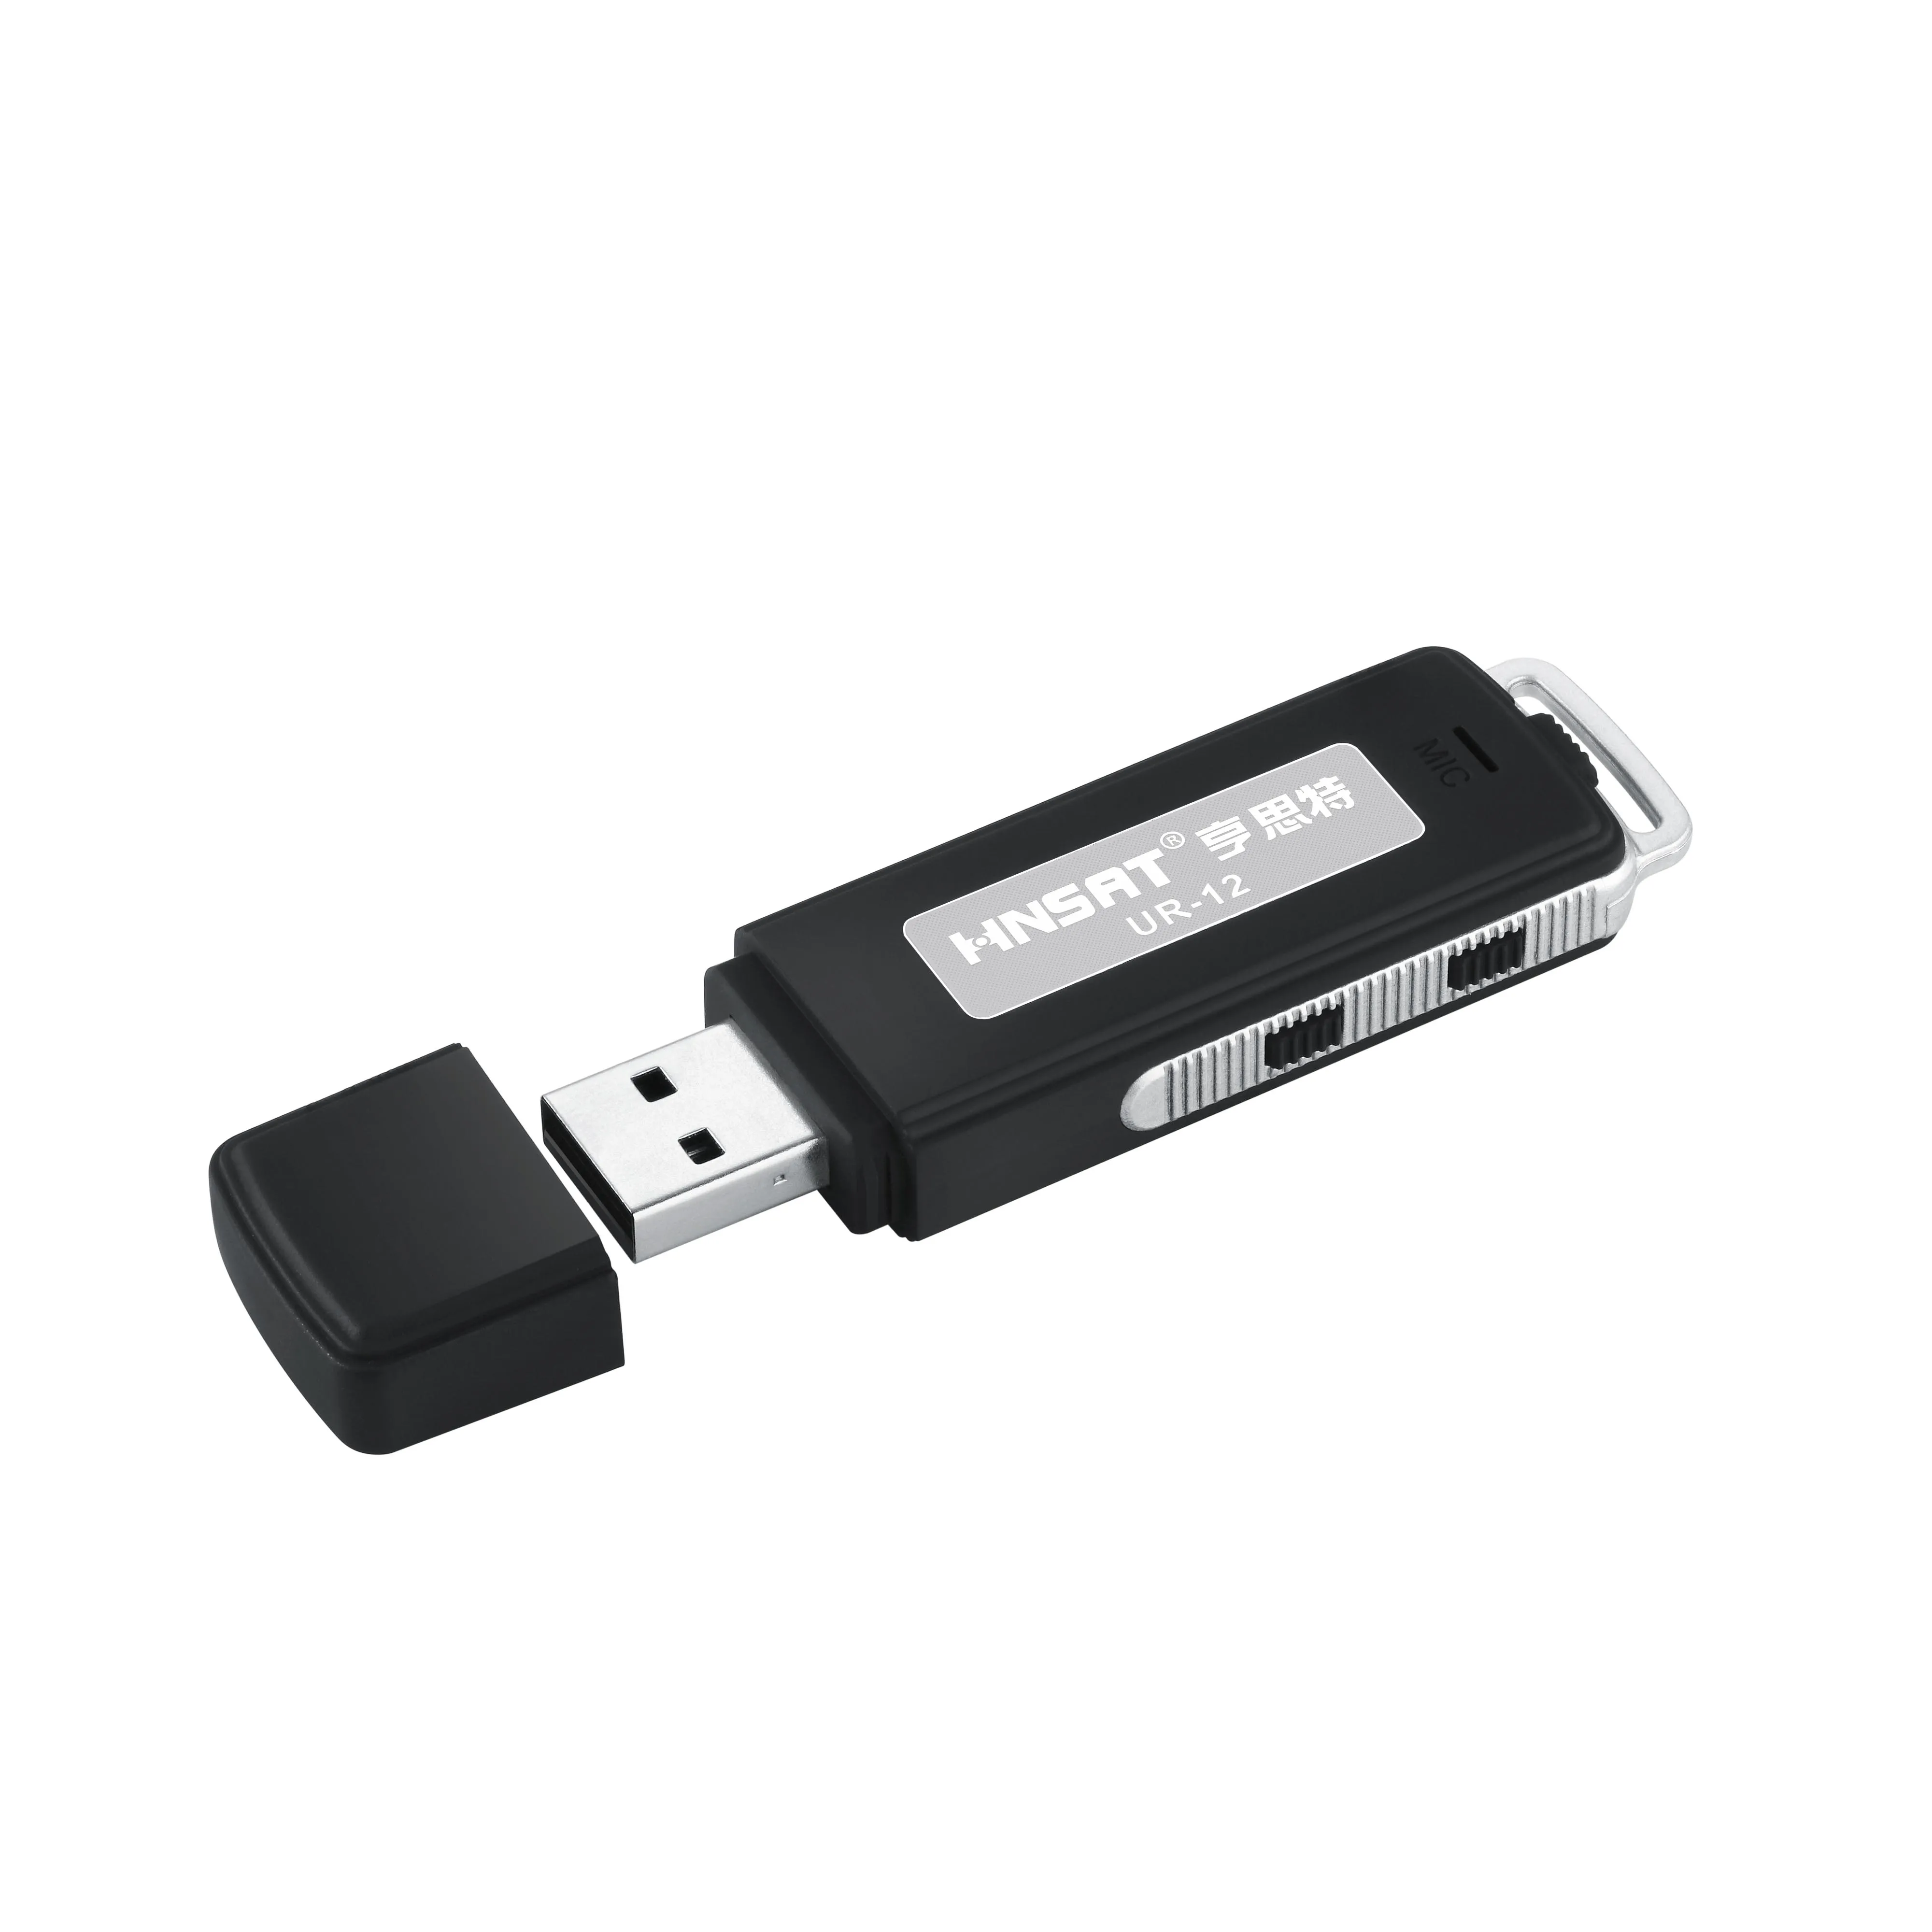 USB Disk Recorder Driver Support MP3 Player 8GB Mini Digital Voice Audio Recorder